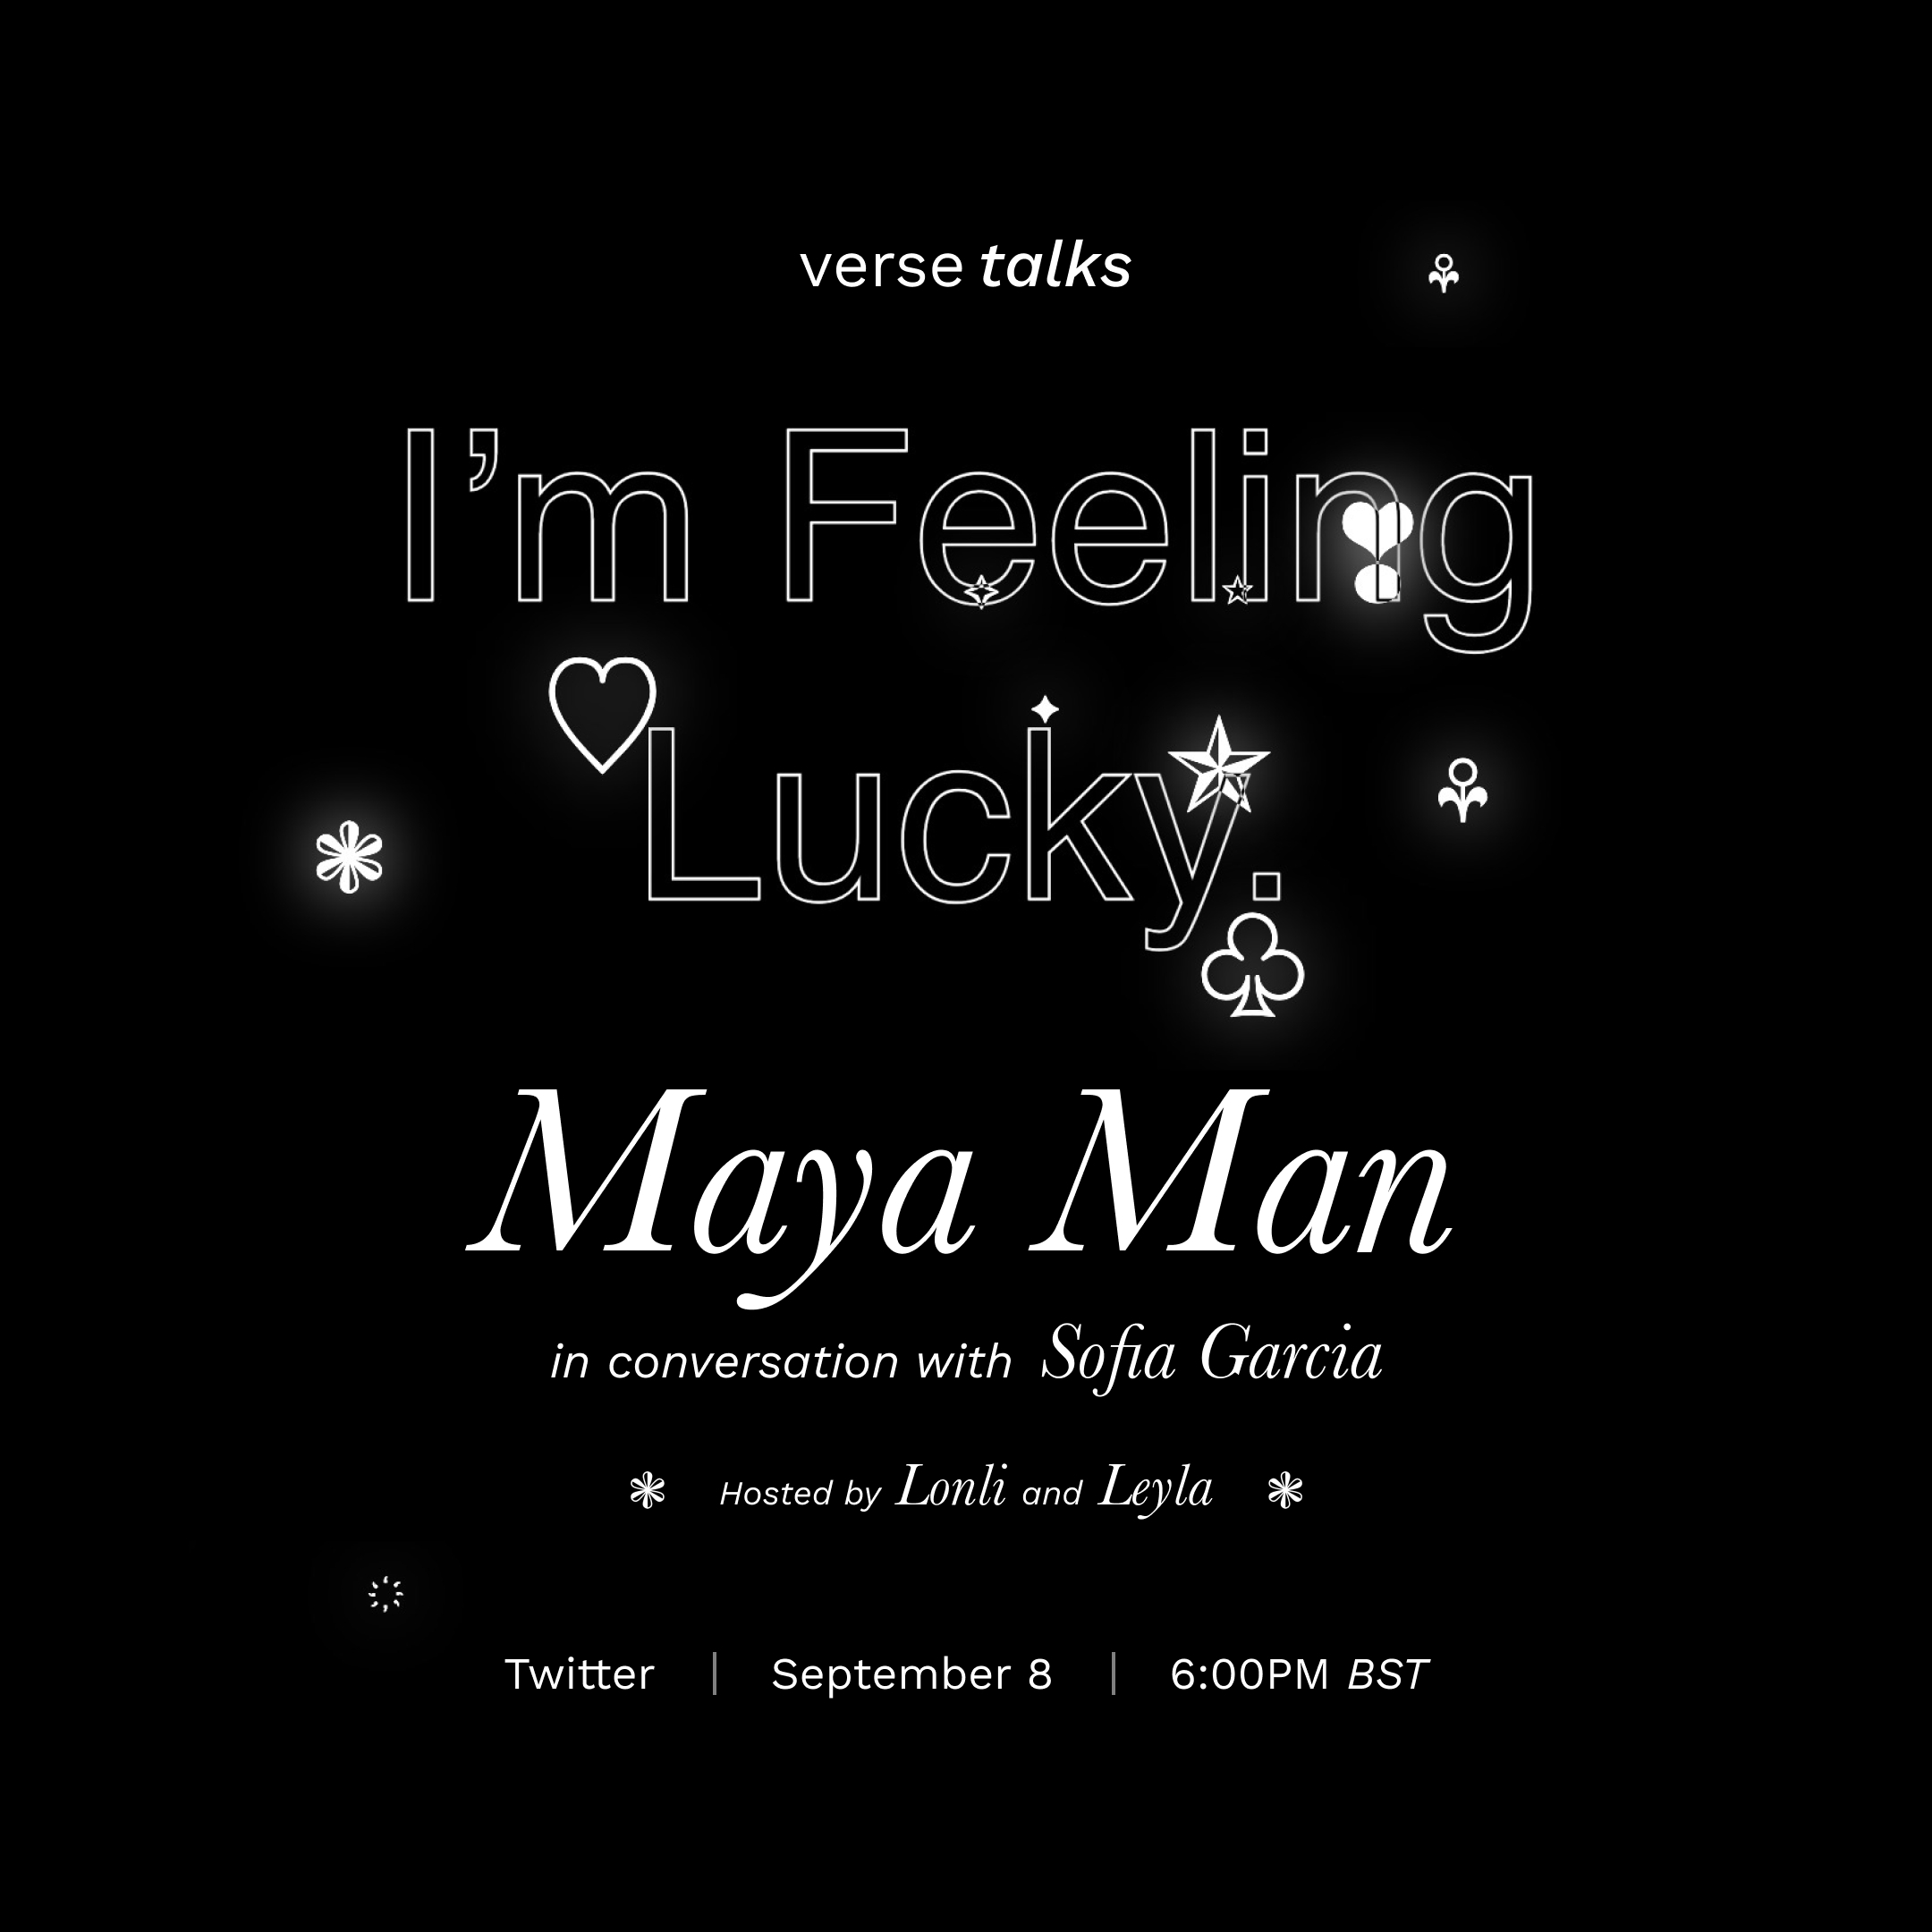 I'm Feeling Lucky by Maya Man